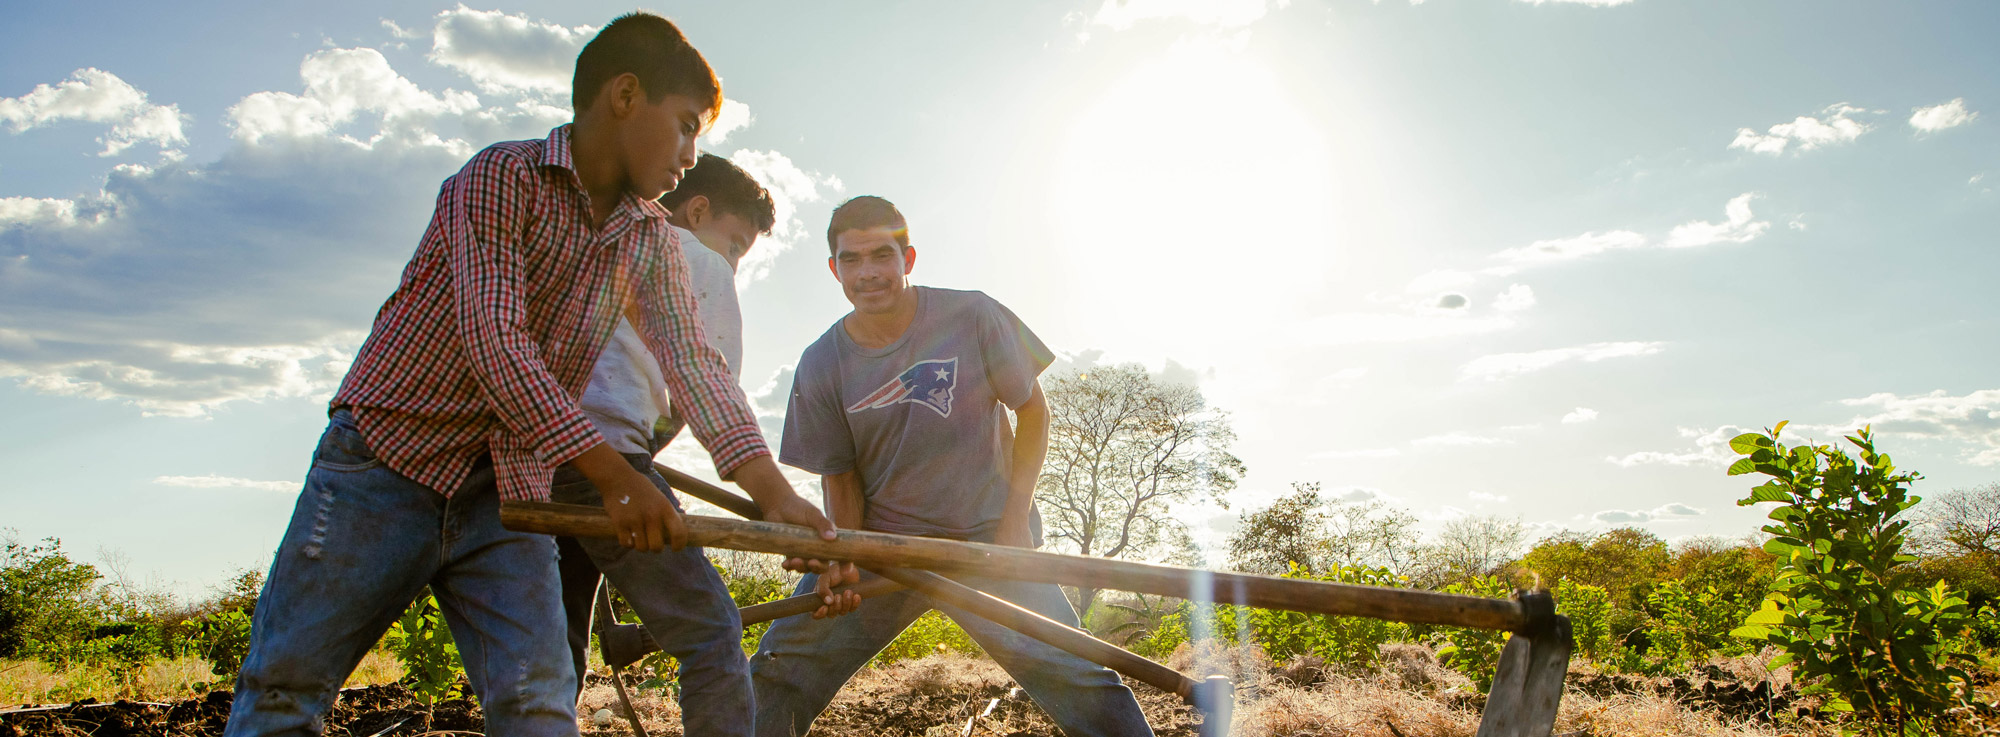 Three boys using tools in soil